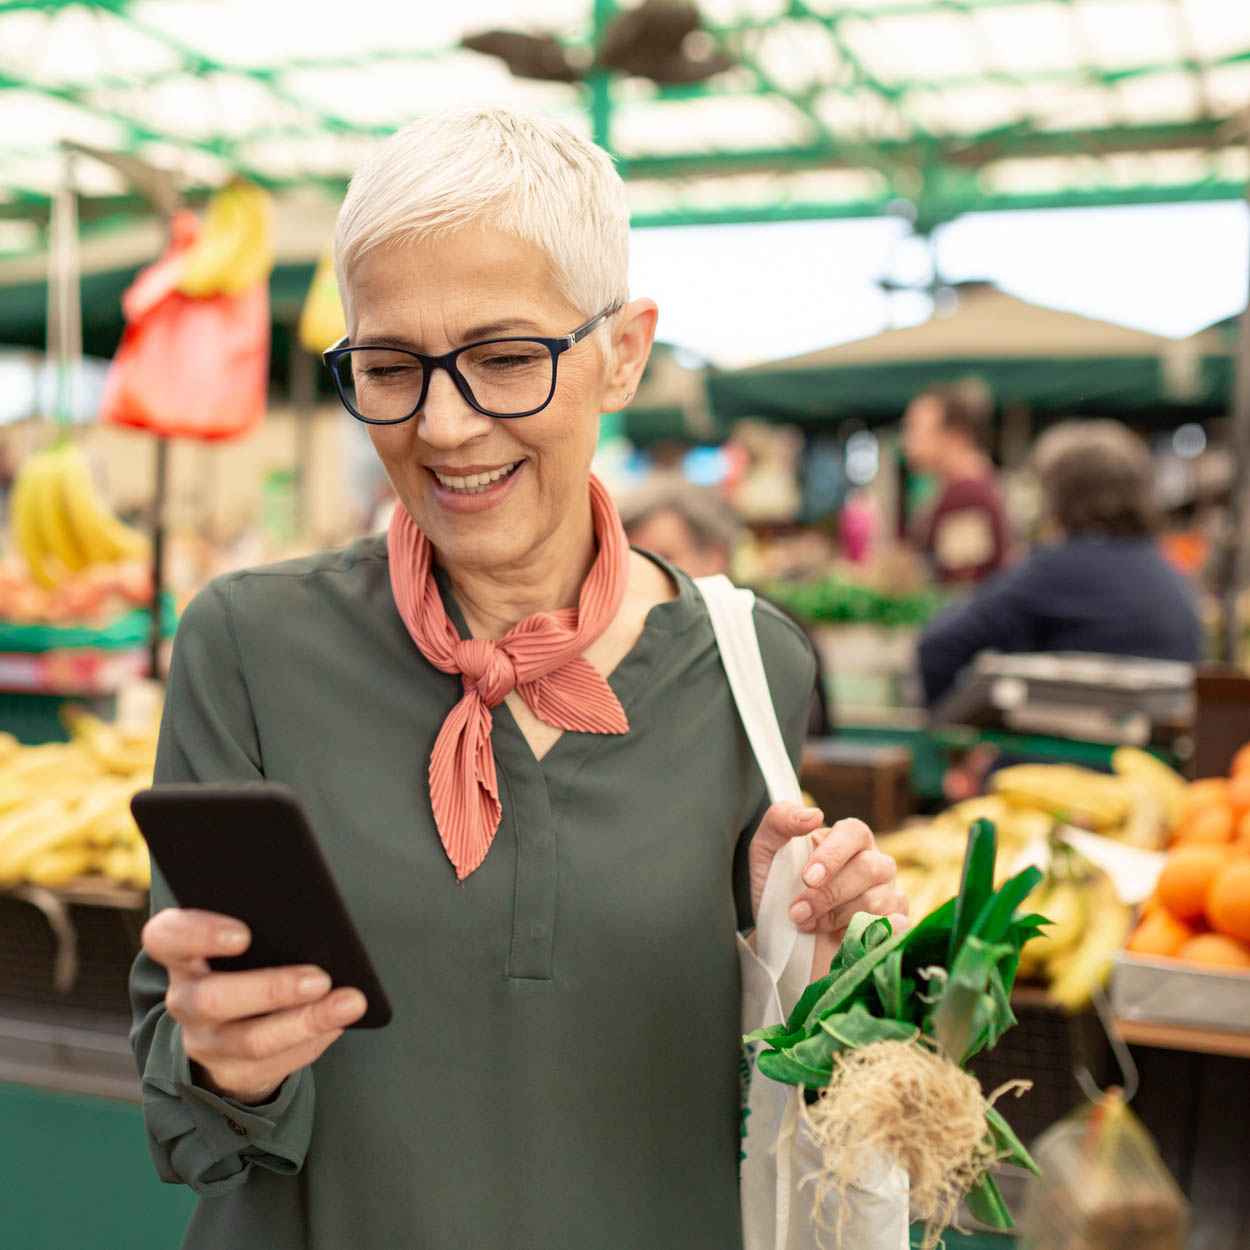 Senior citizen using automated campaign at farmer's market